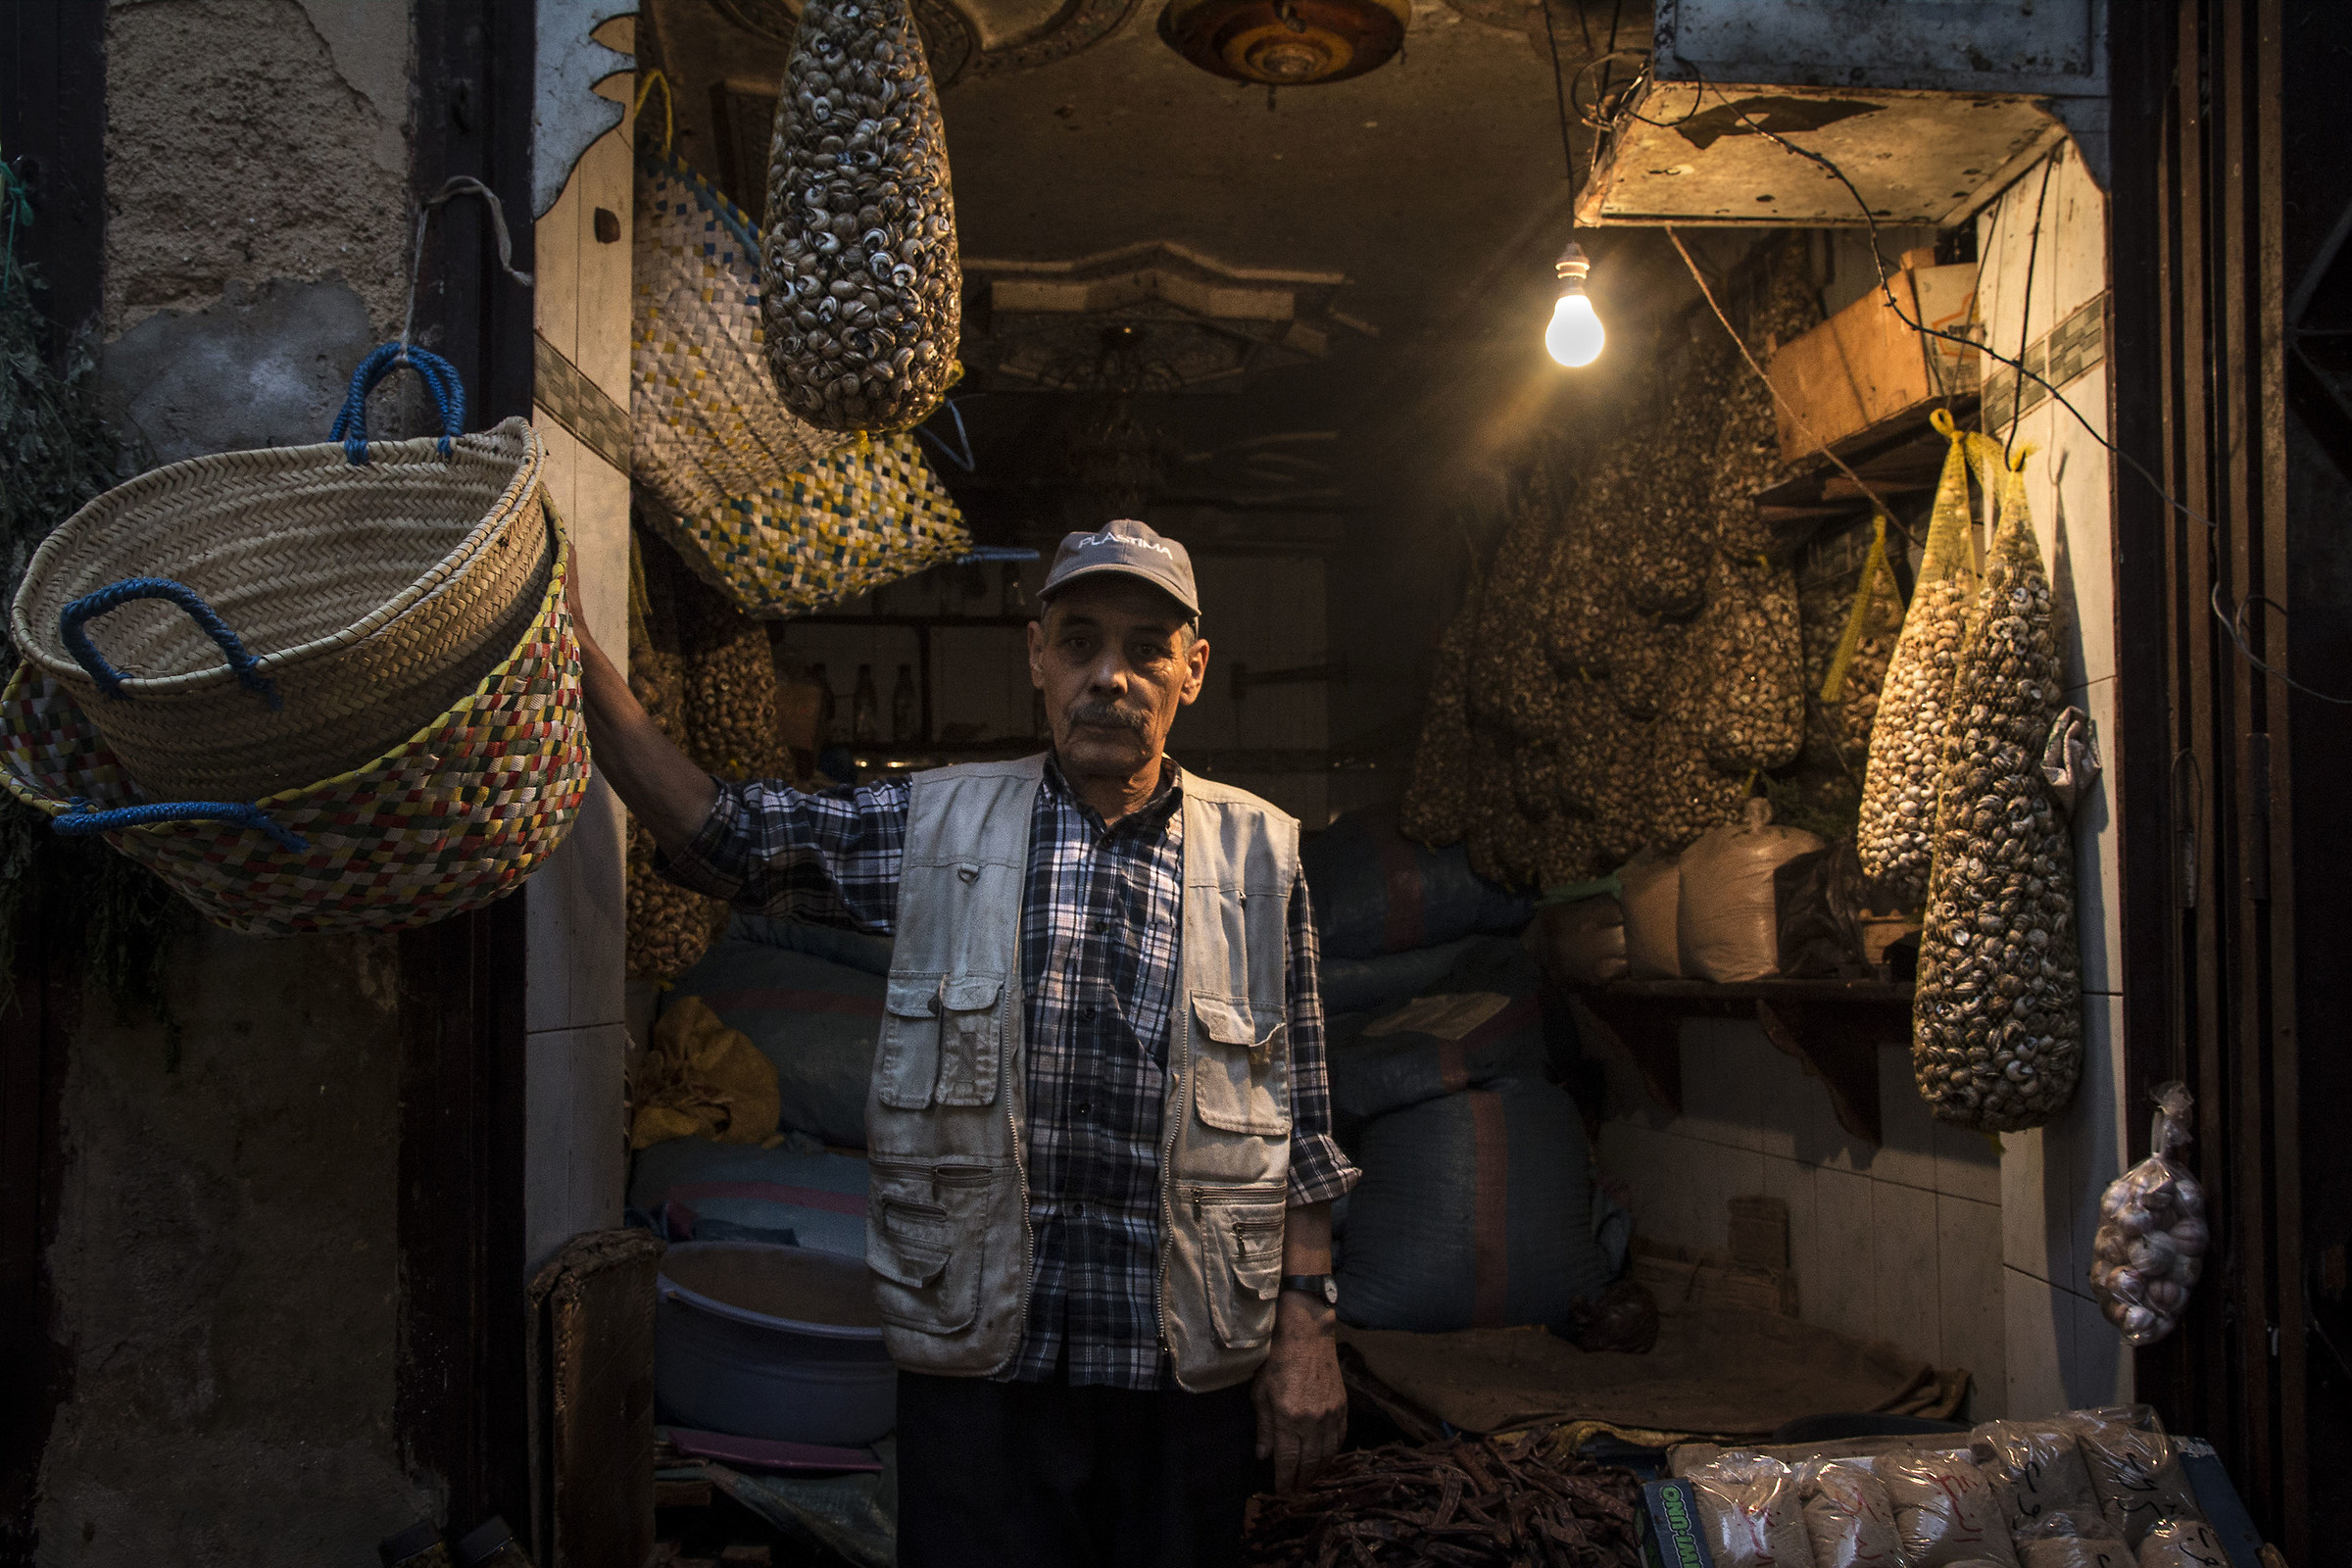 Portraits in Medina - The snail seller...